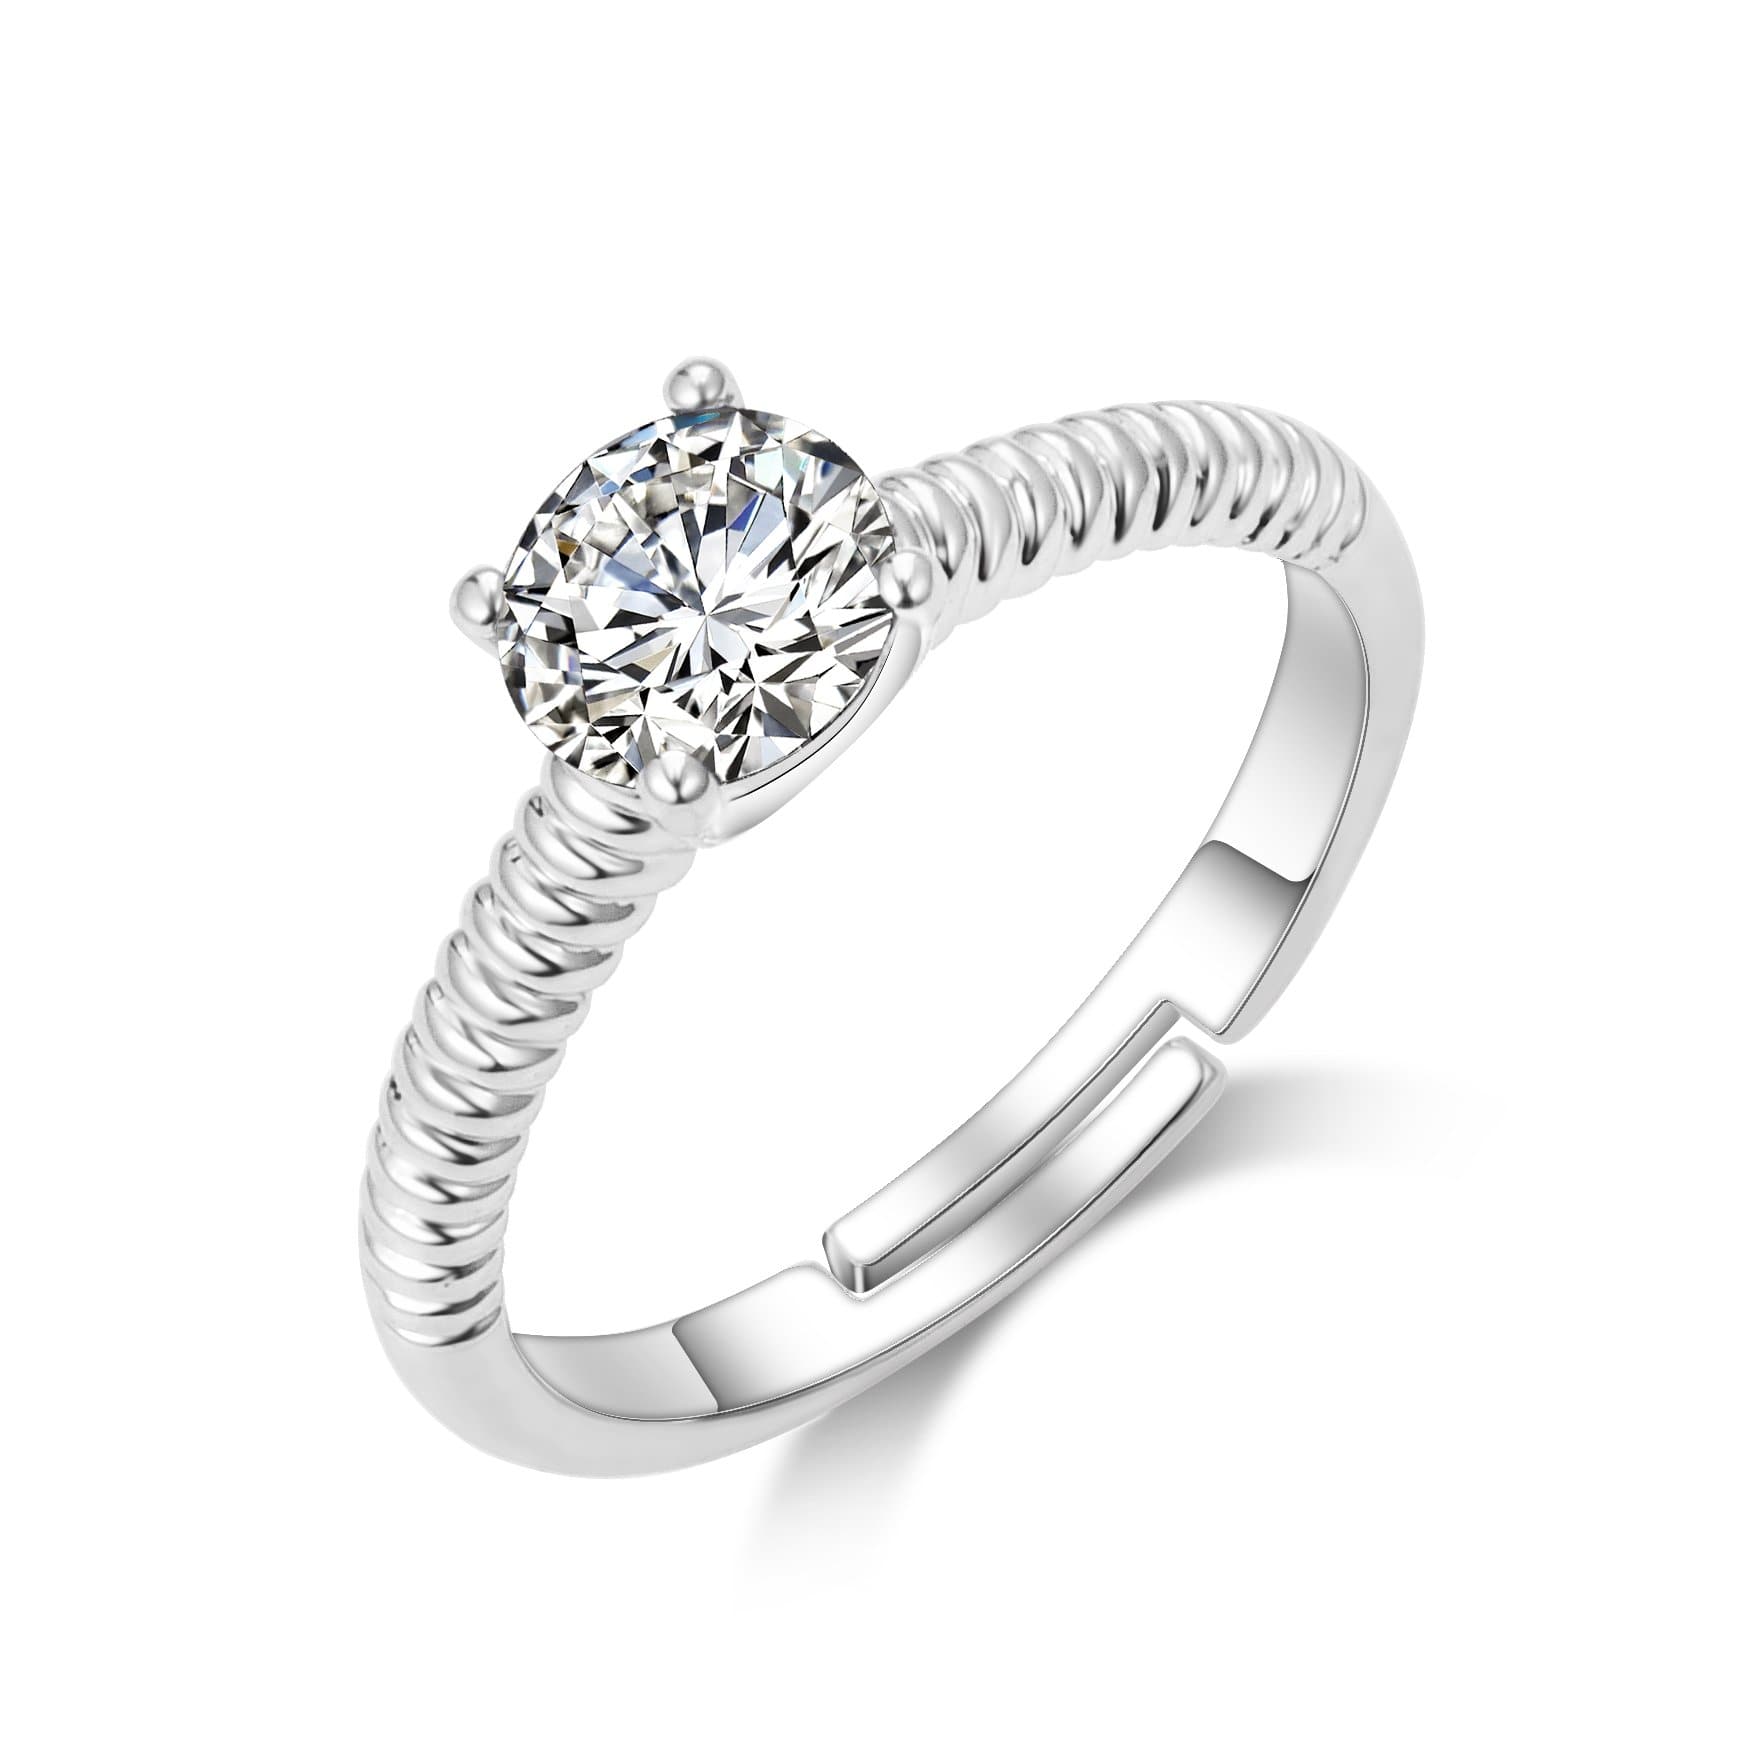 Adjustable Crystal Ring Created with Zircondia® Crystals by Philip Jones Jewellery